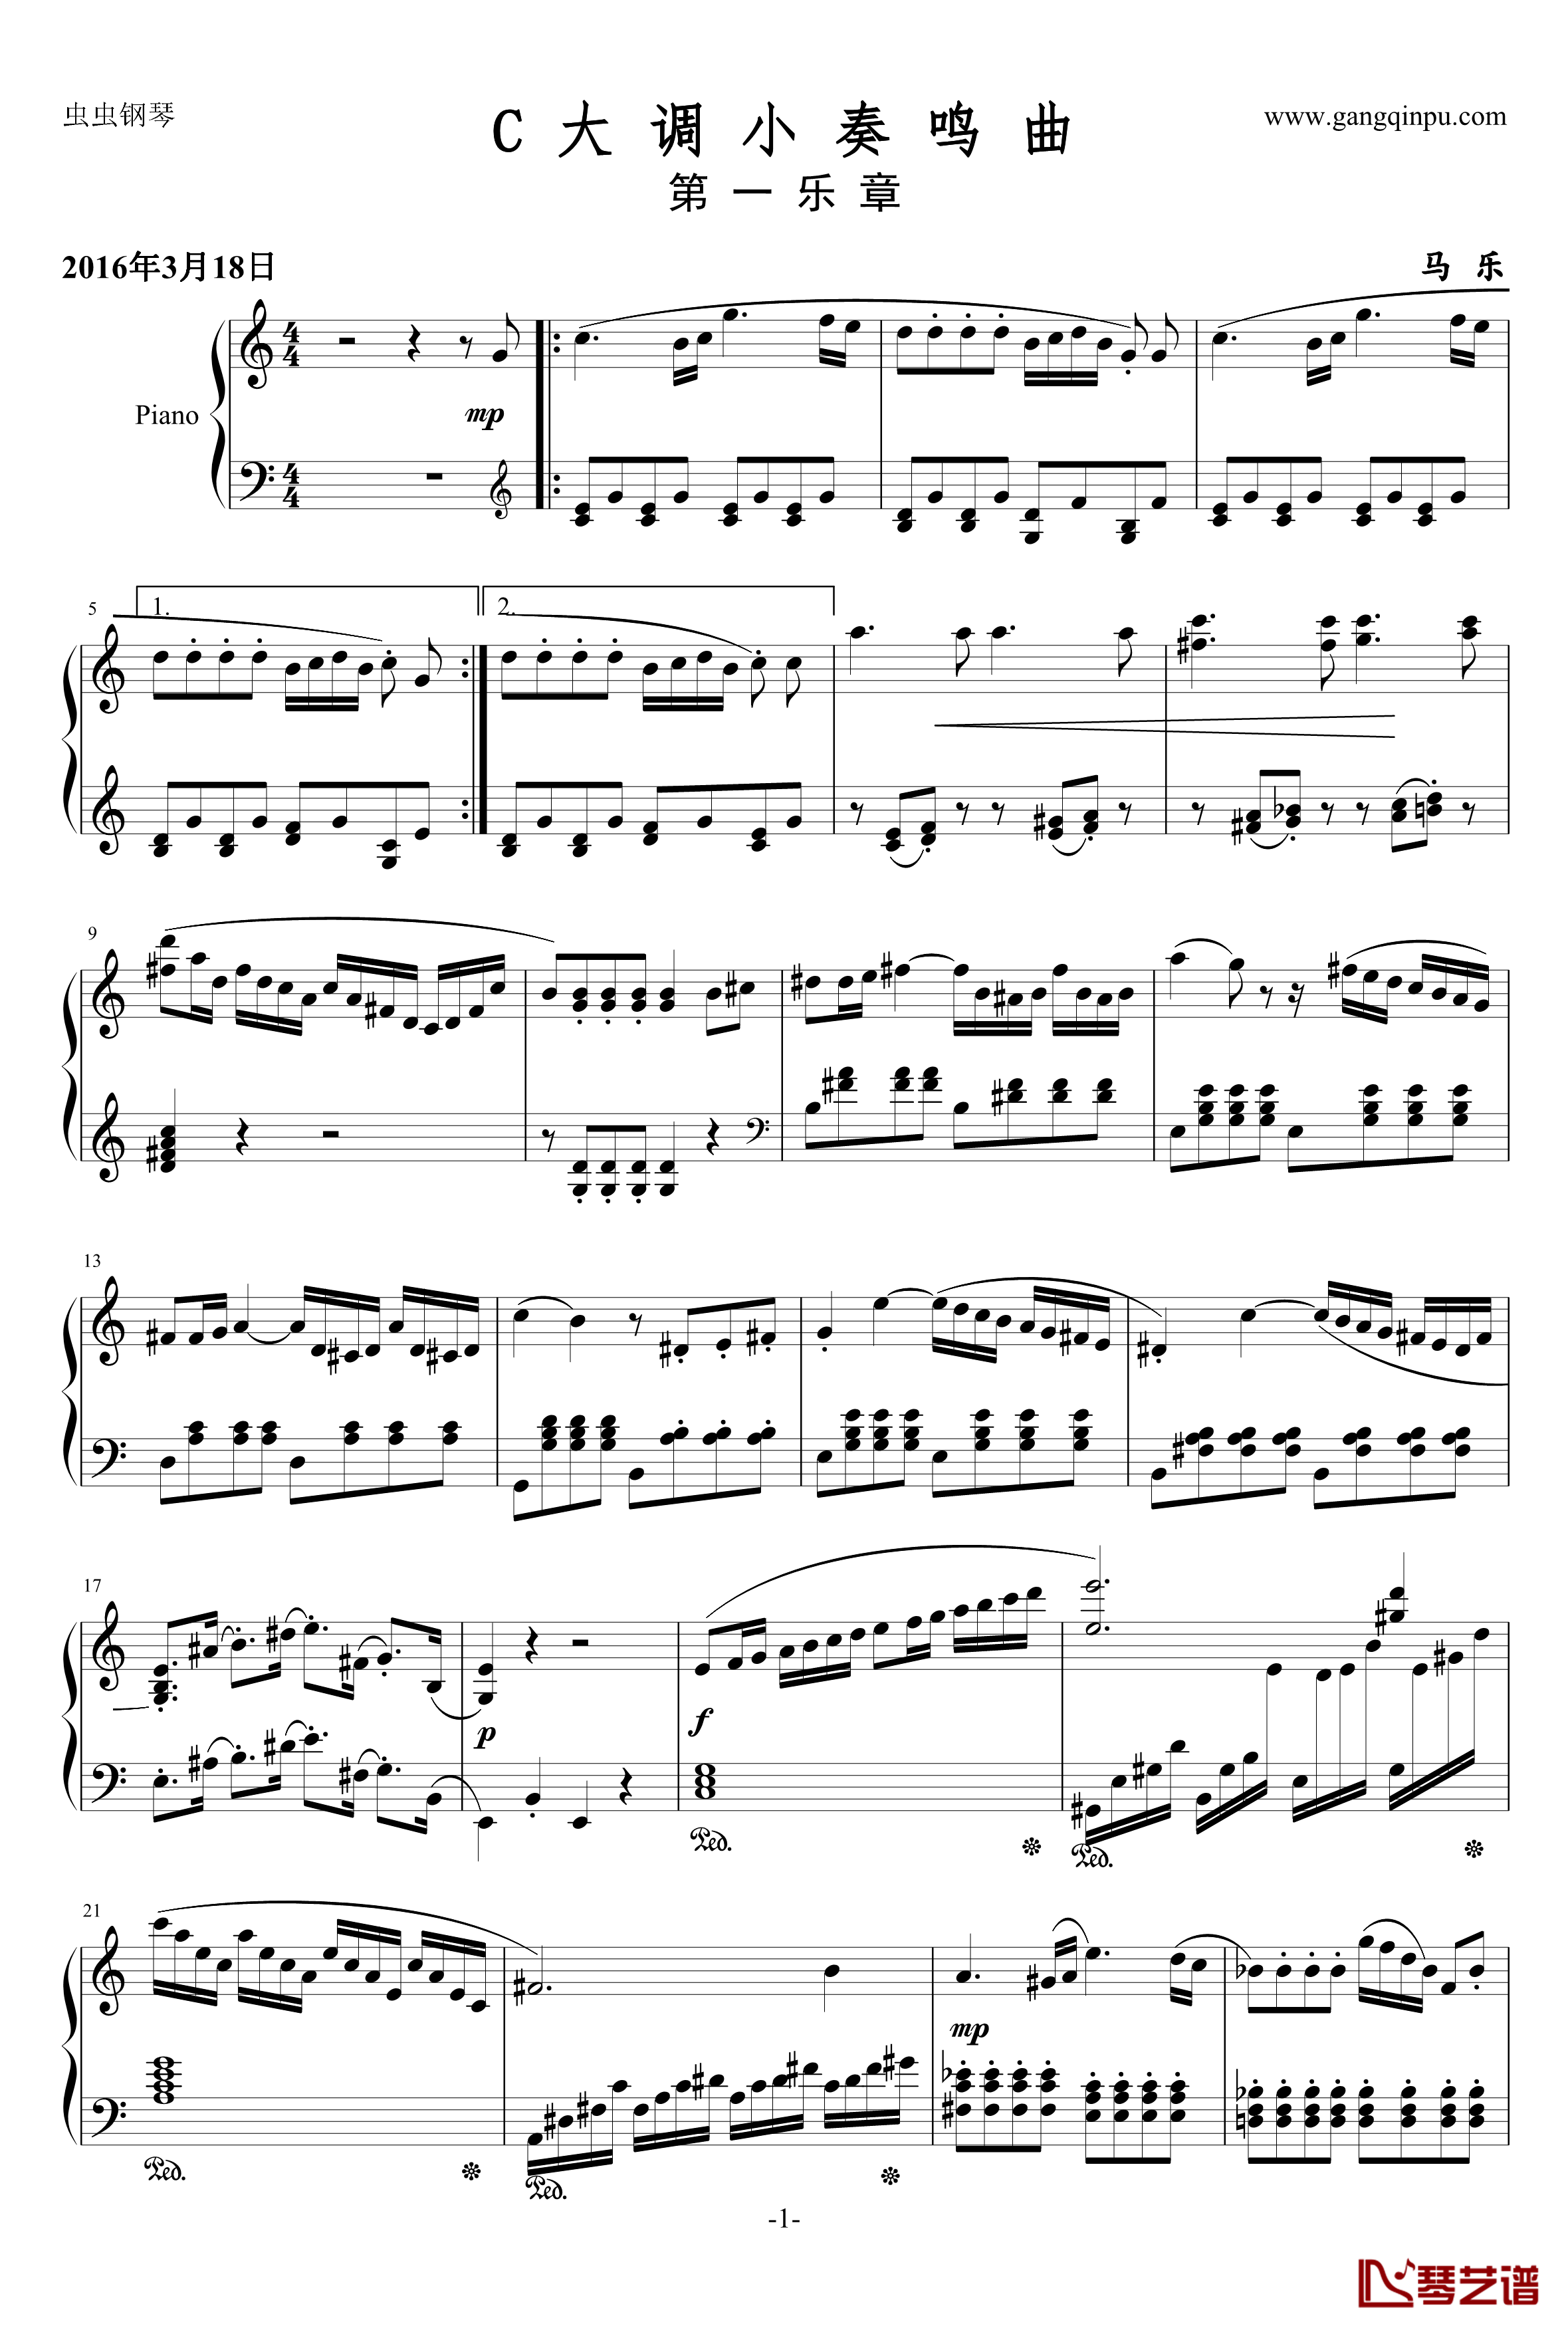 C大调小奏鸣曲钢琴谱-第一乐章-乐之琴1